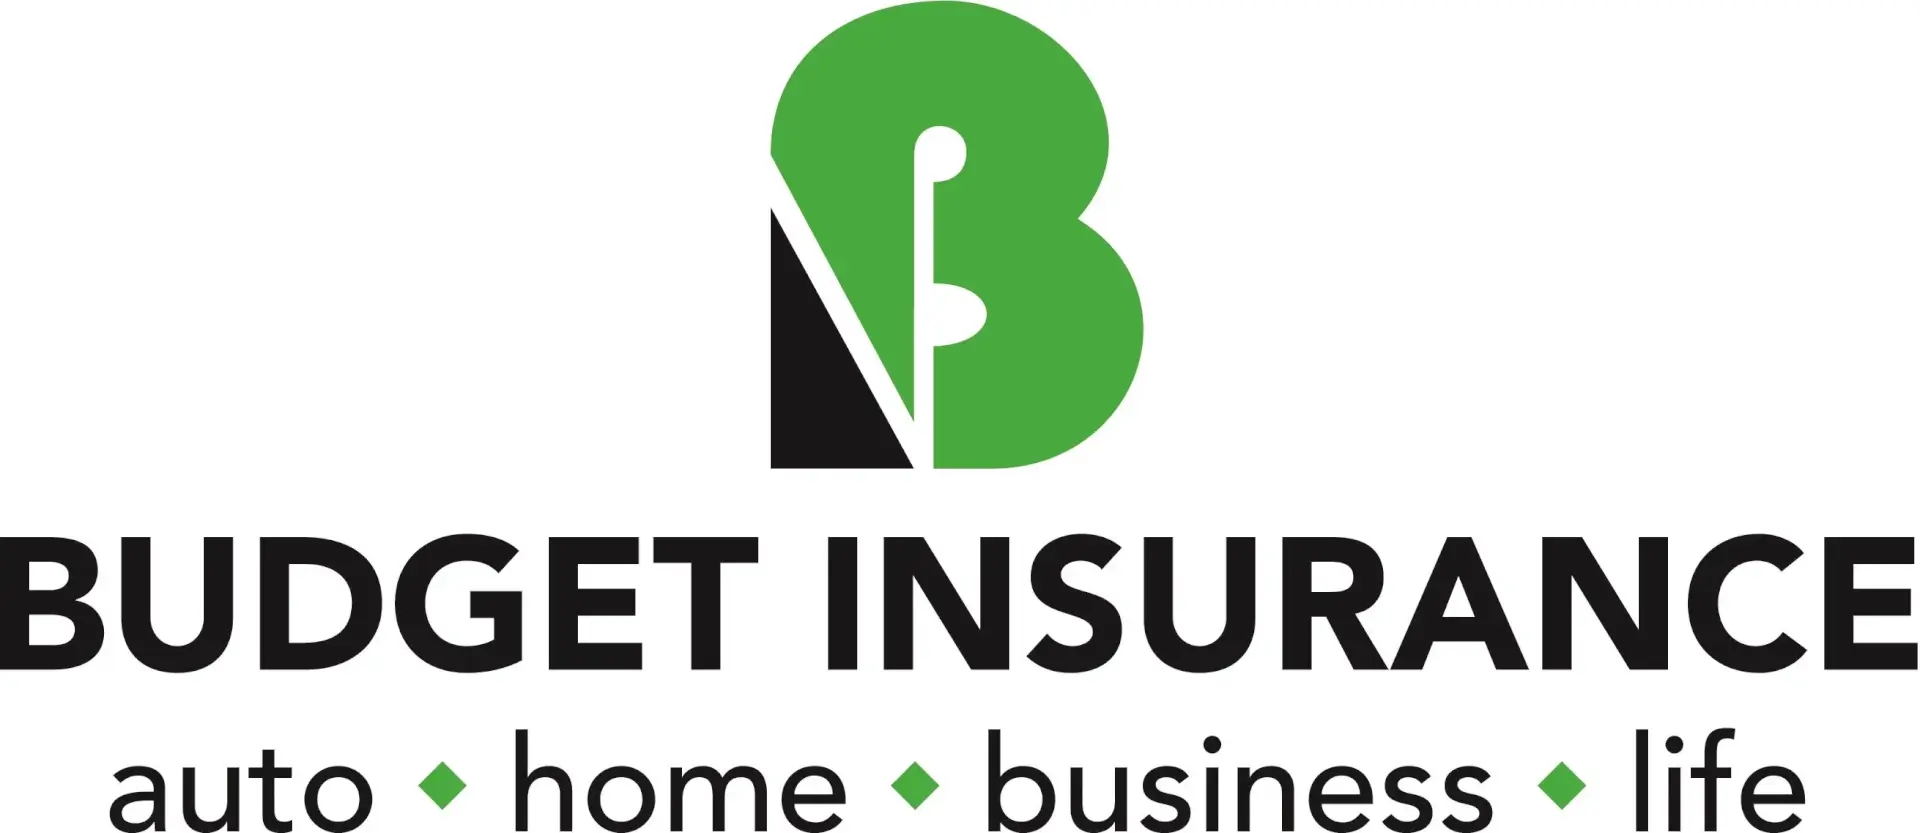 Budget Insurance, Inc